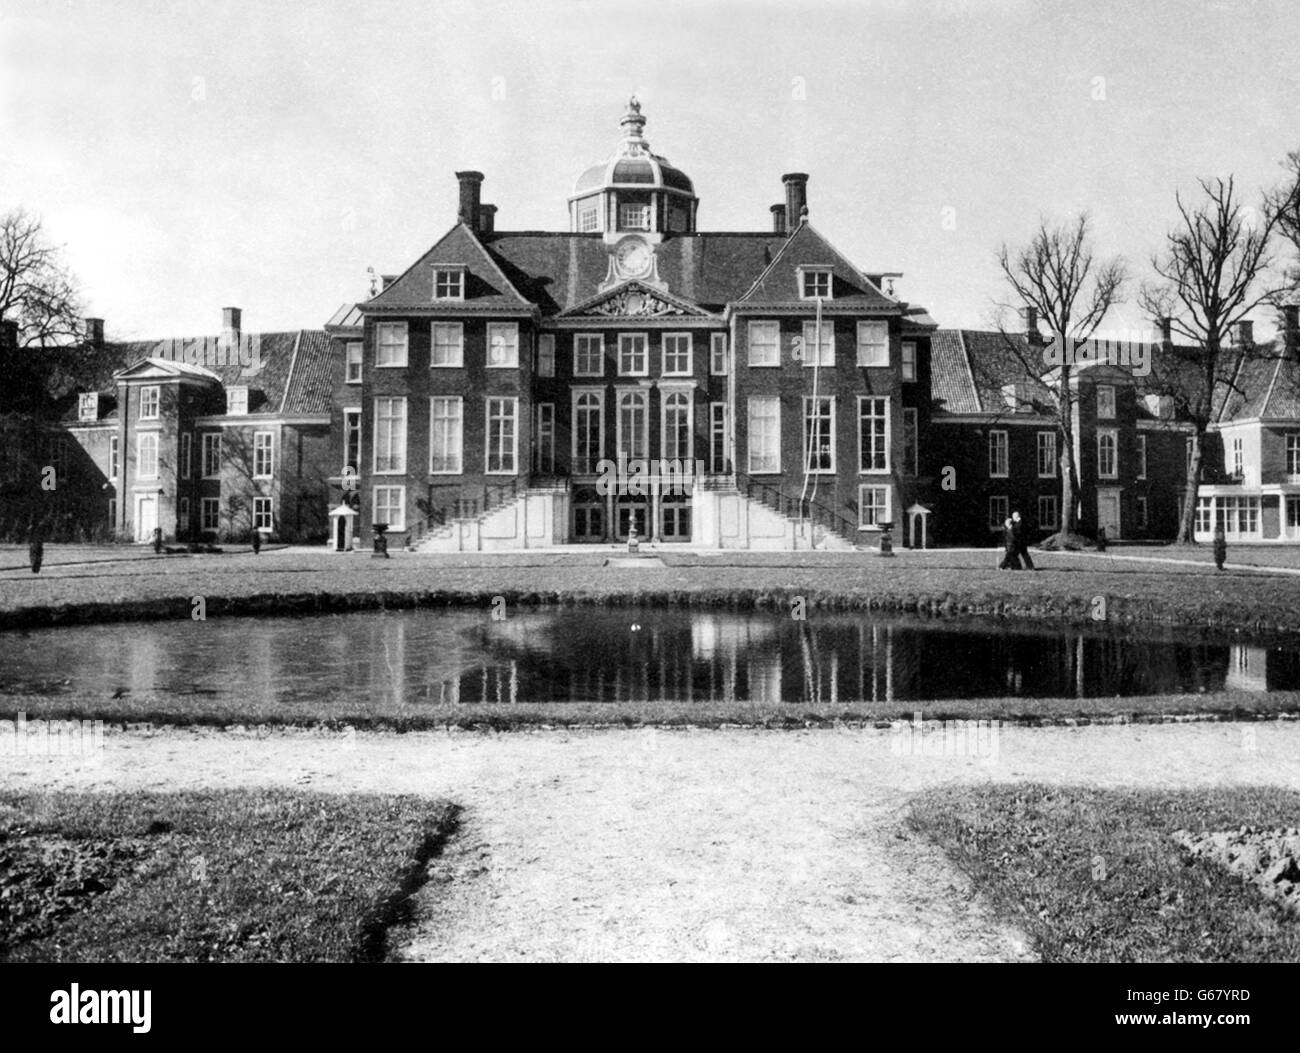 Huis ten Bosch Palace Stock Photo - Alamy